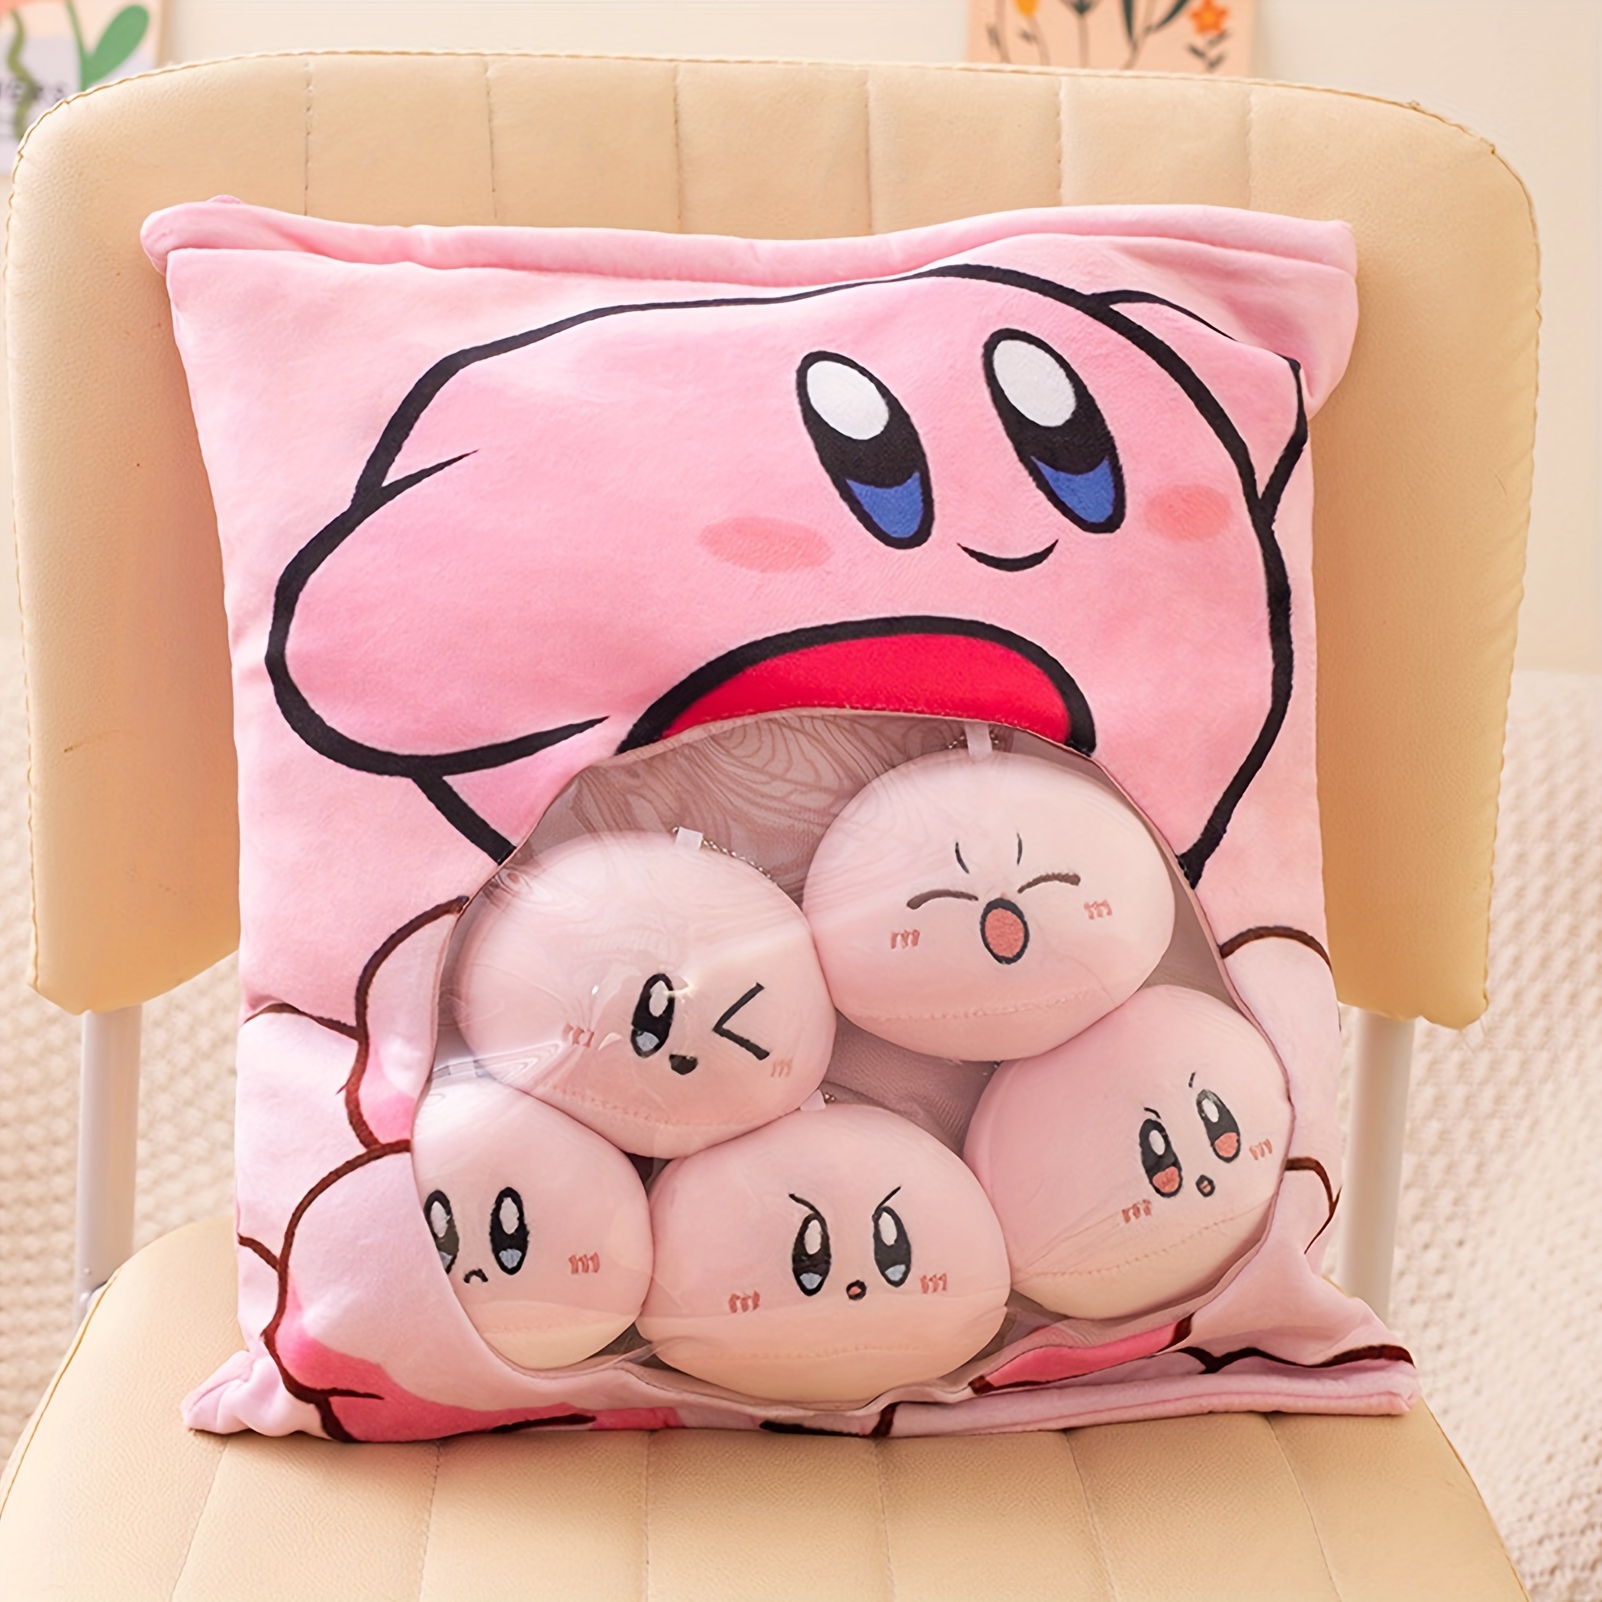 Kirby Aventuras todas las estrellas Kirby felpa, 20 cm/8 pulgadas